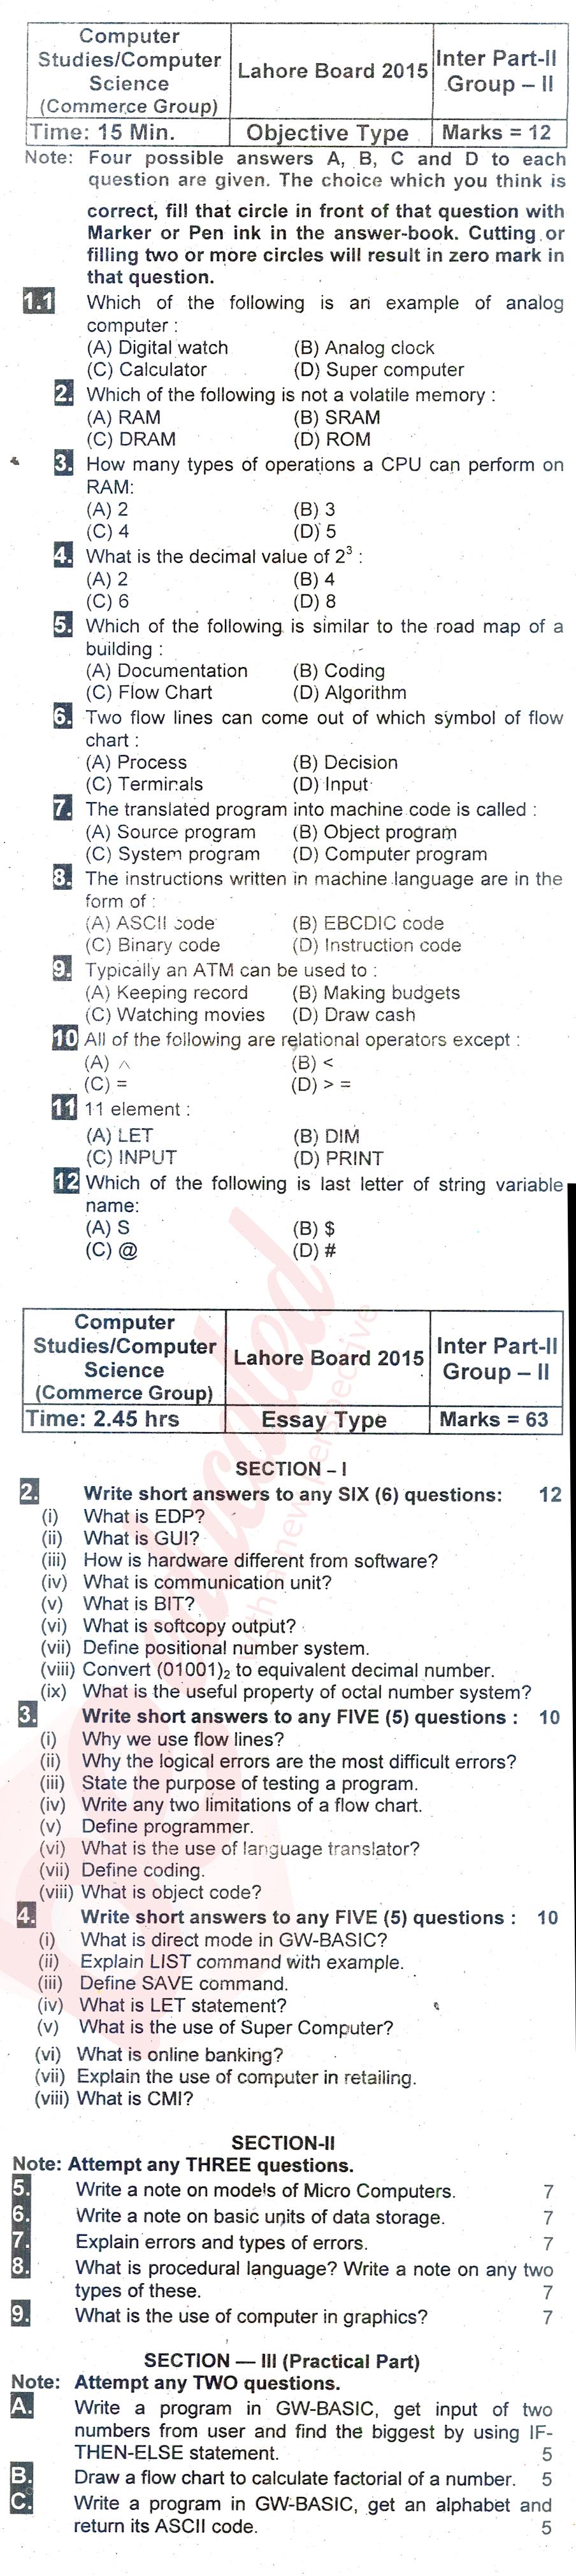 Computer Science ICOM Part 2 Past Paper Group 2 BISE Lahore 2015